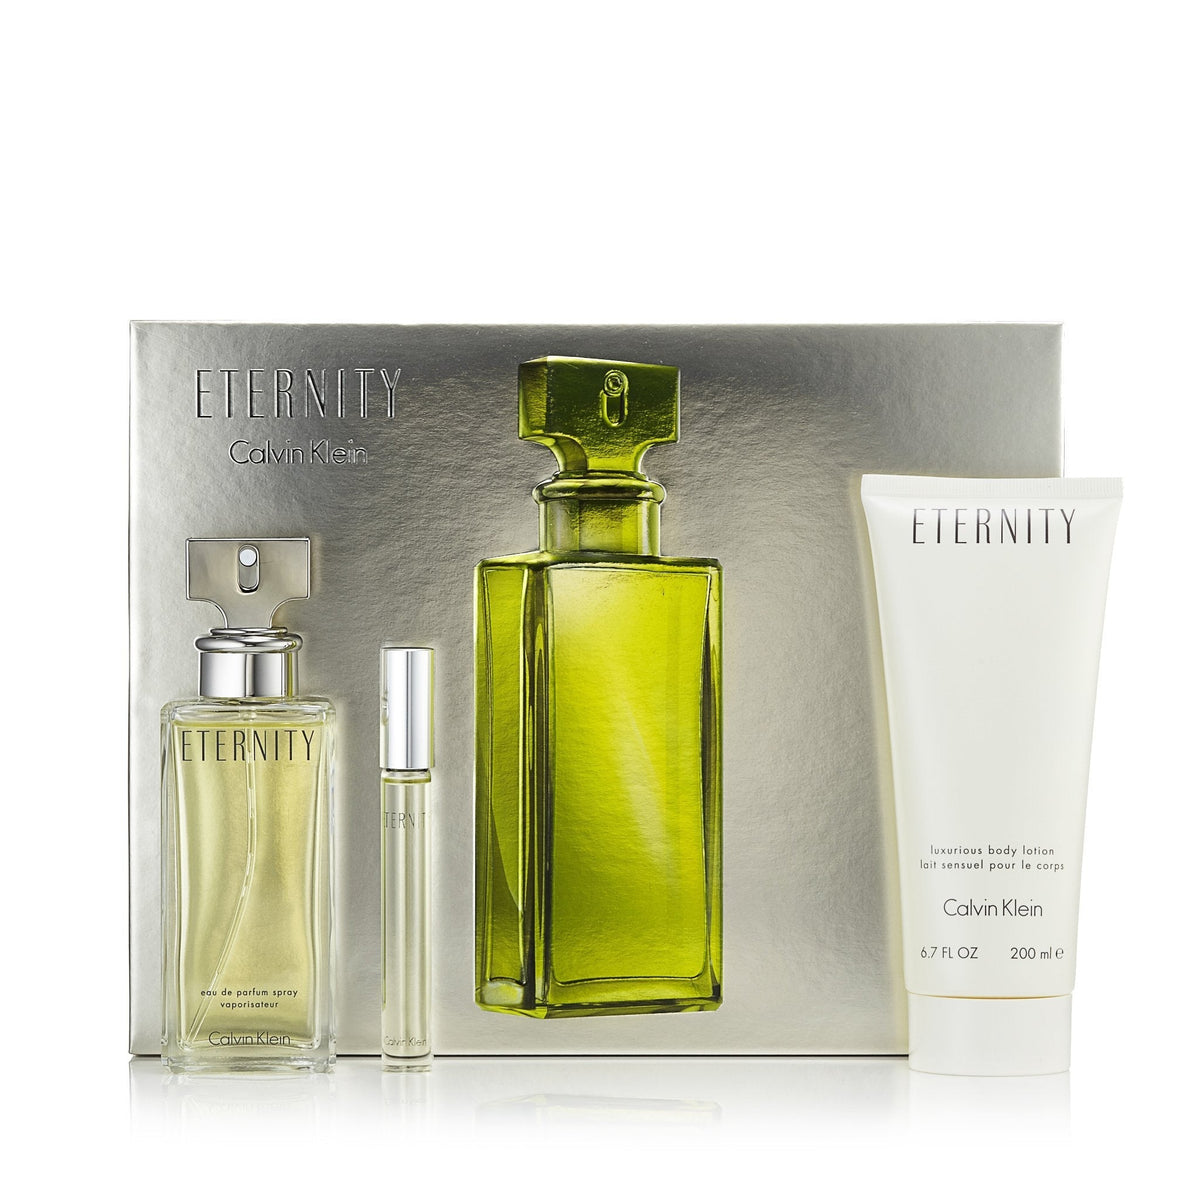 CK Eternity Gift Set for Women by Calvin Klein 3.4 oz.